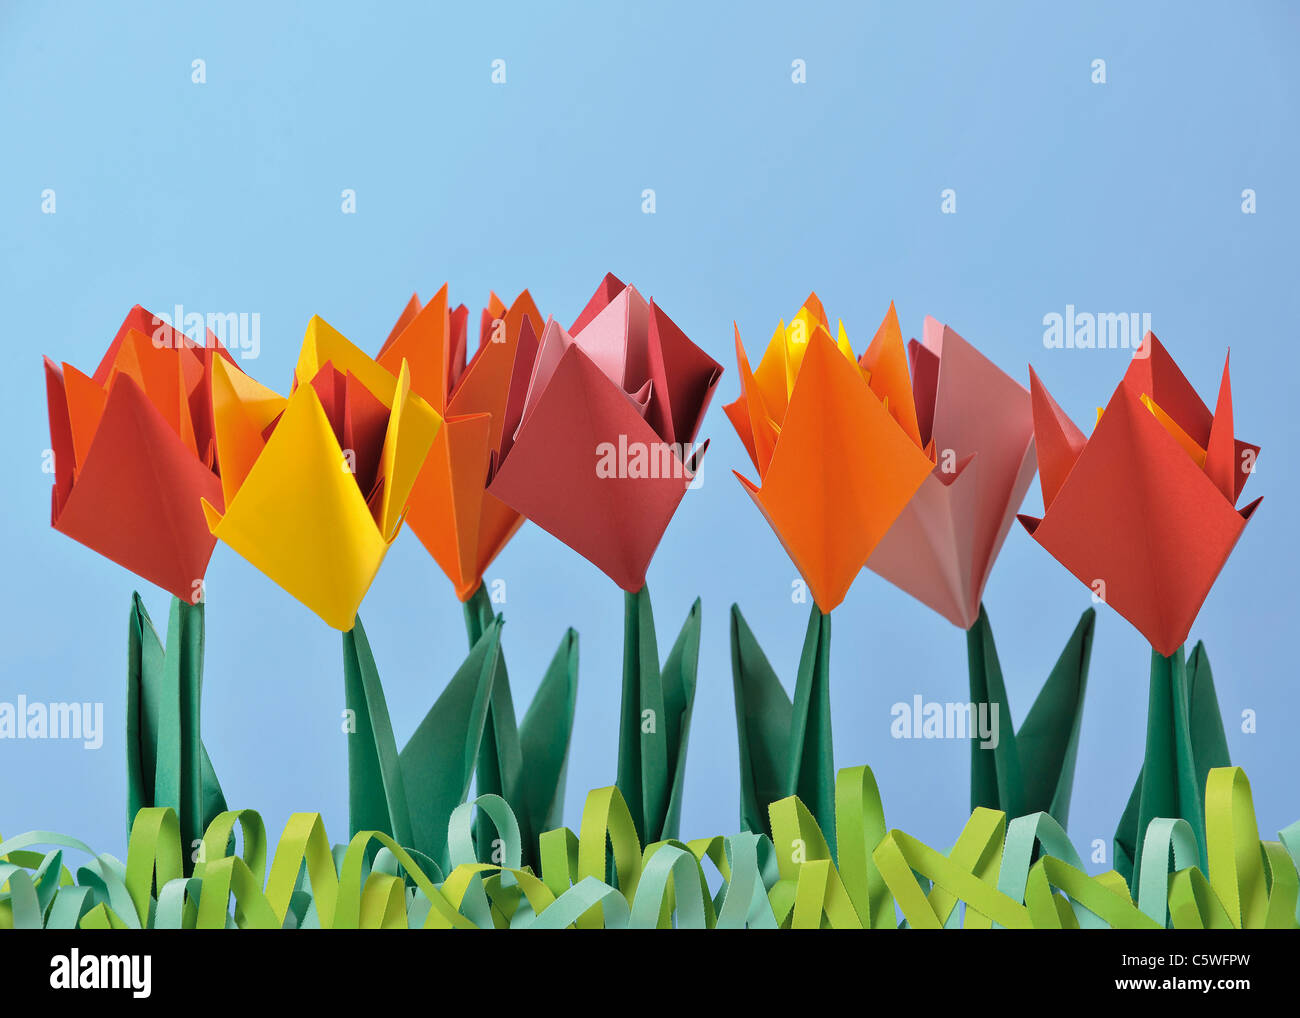 Origami tulips against blue background Stock Photo